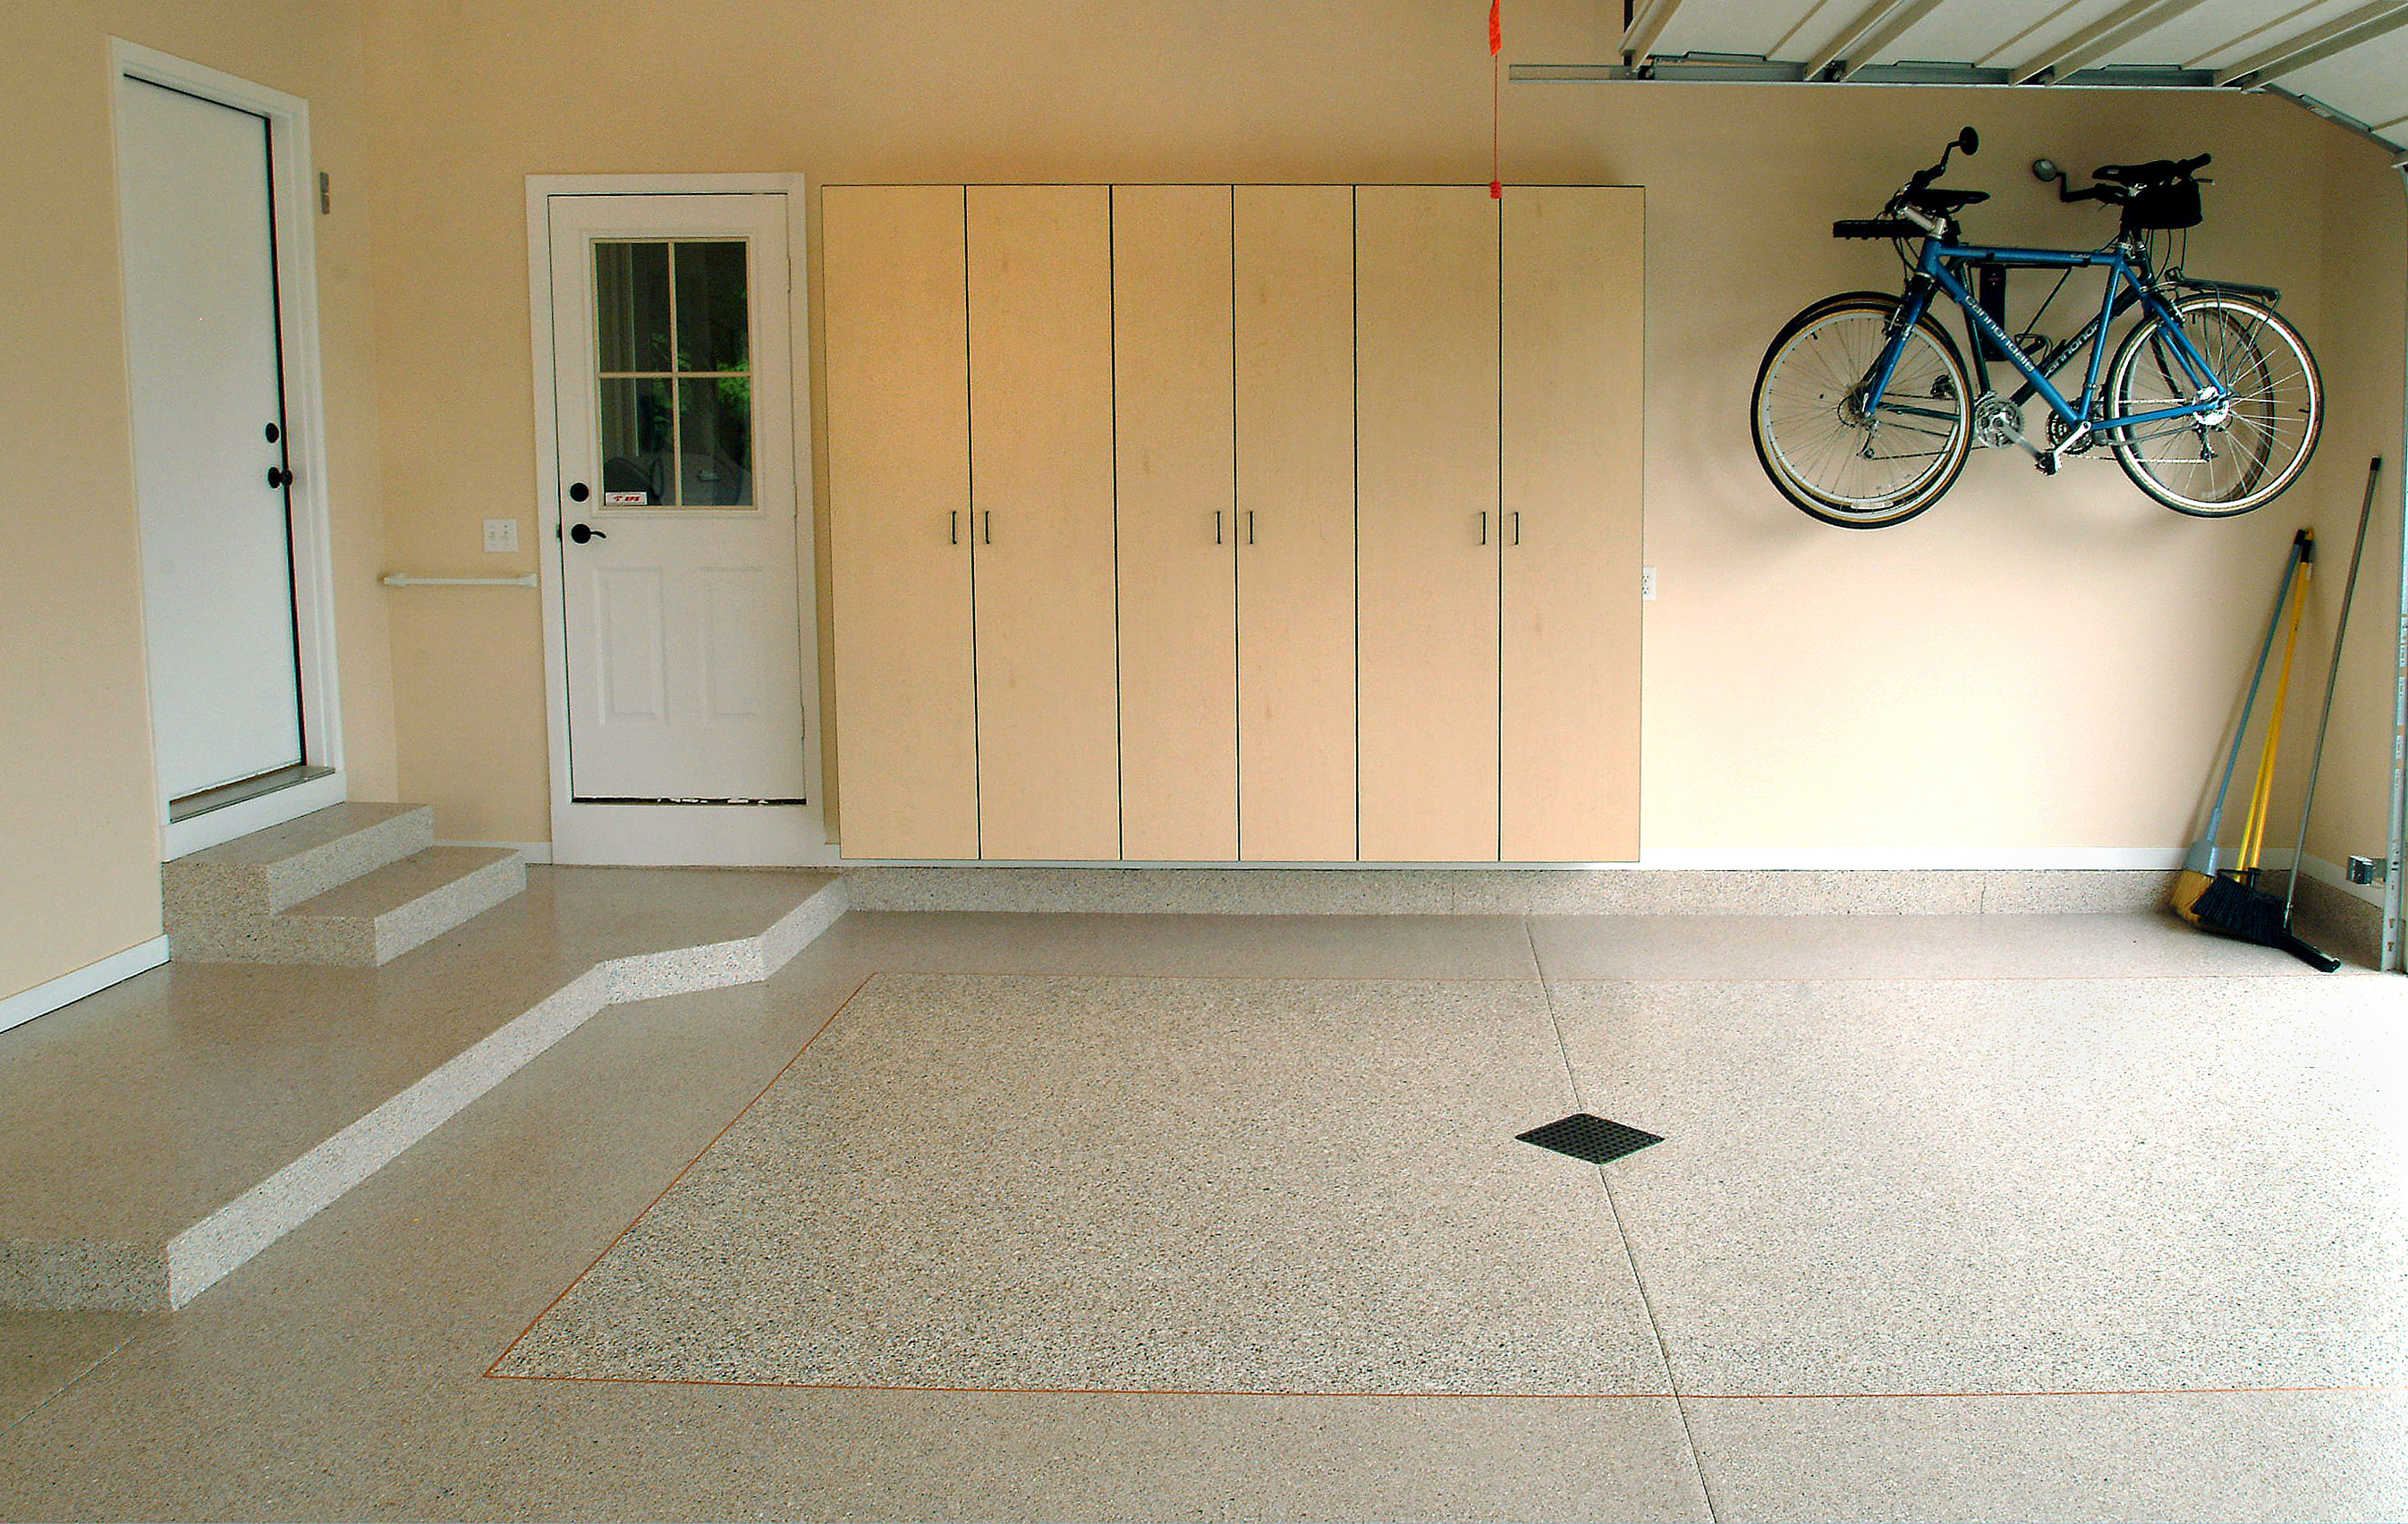 Best ideas about DIY Garage Floor
. Save or Pin DIY Epoxy Garage Floor coating Now.